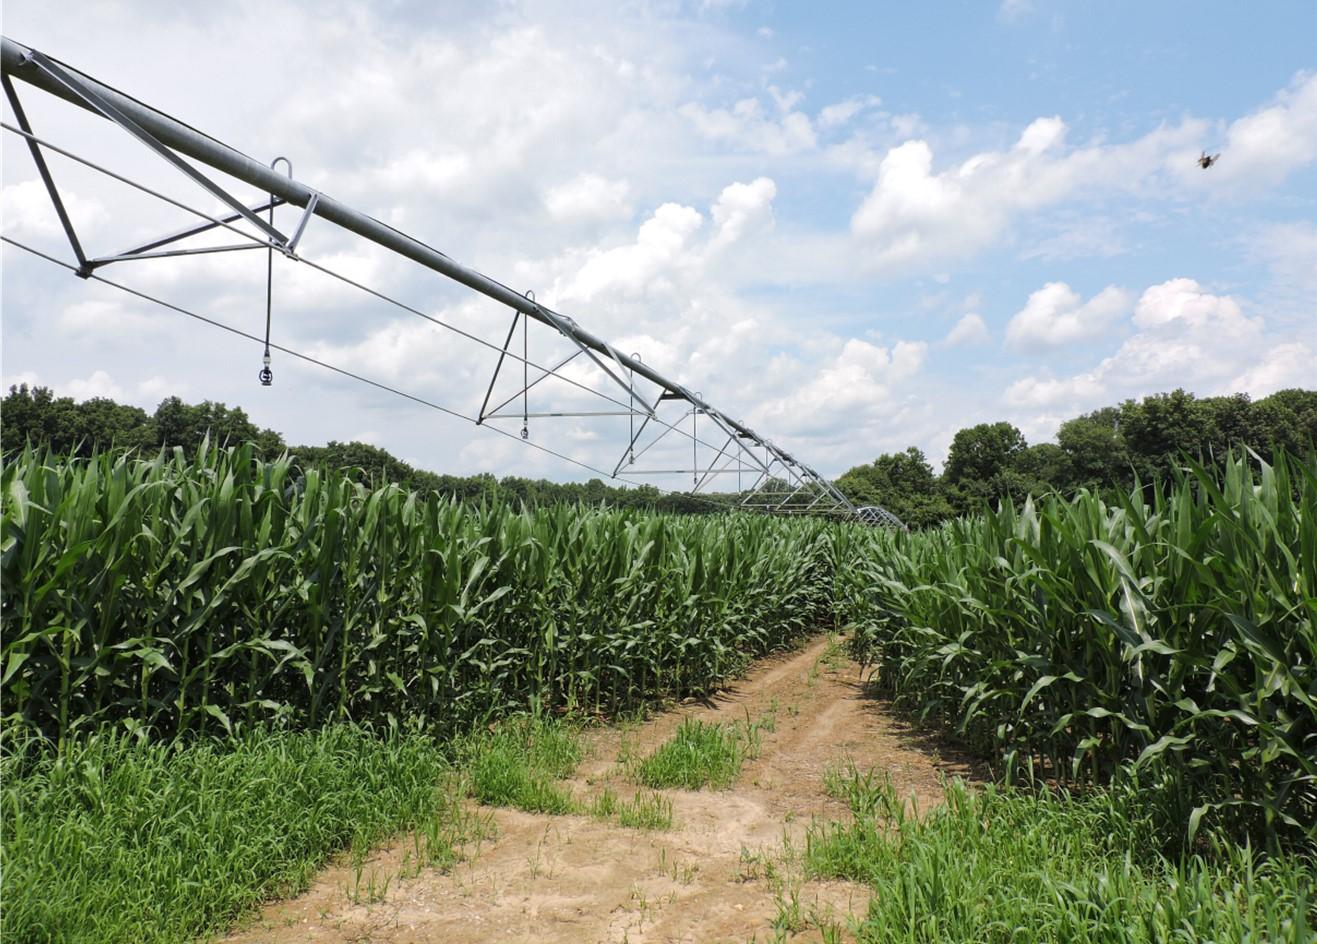 irrigation sprayers over crop field